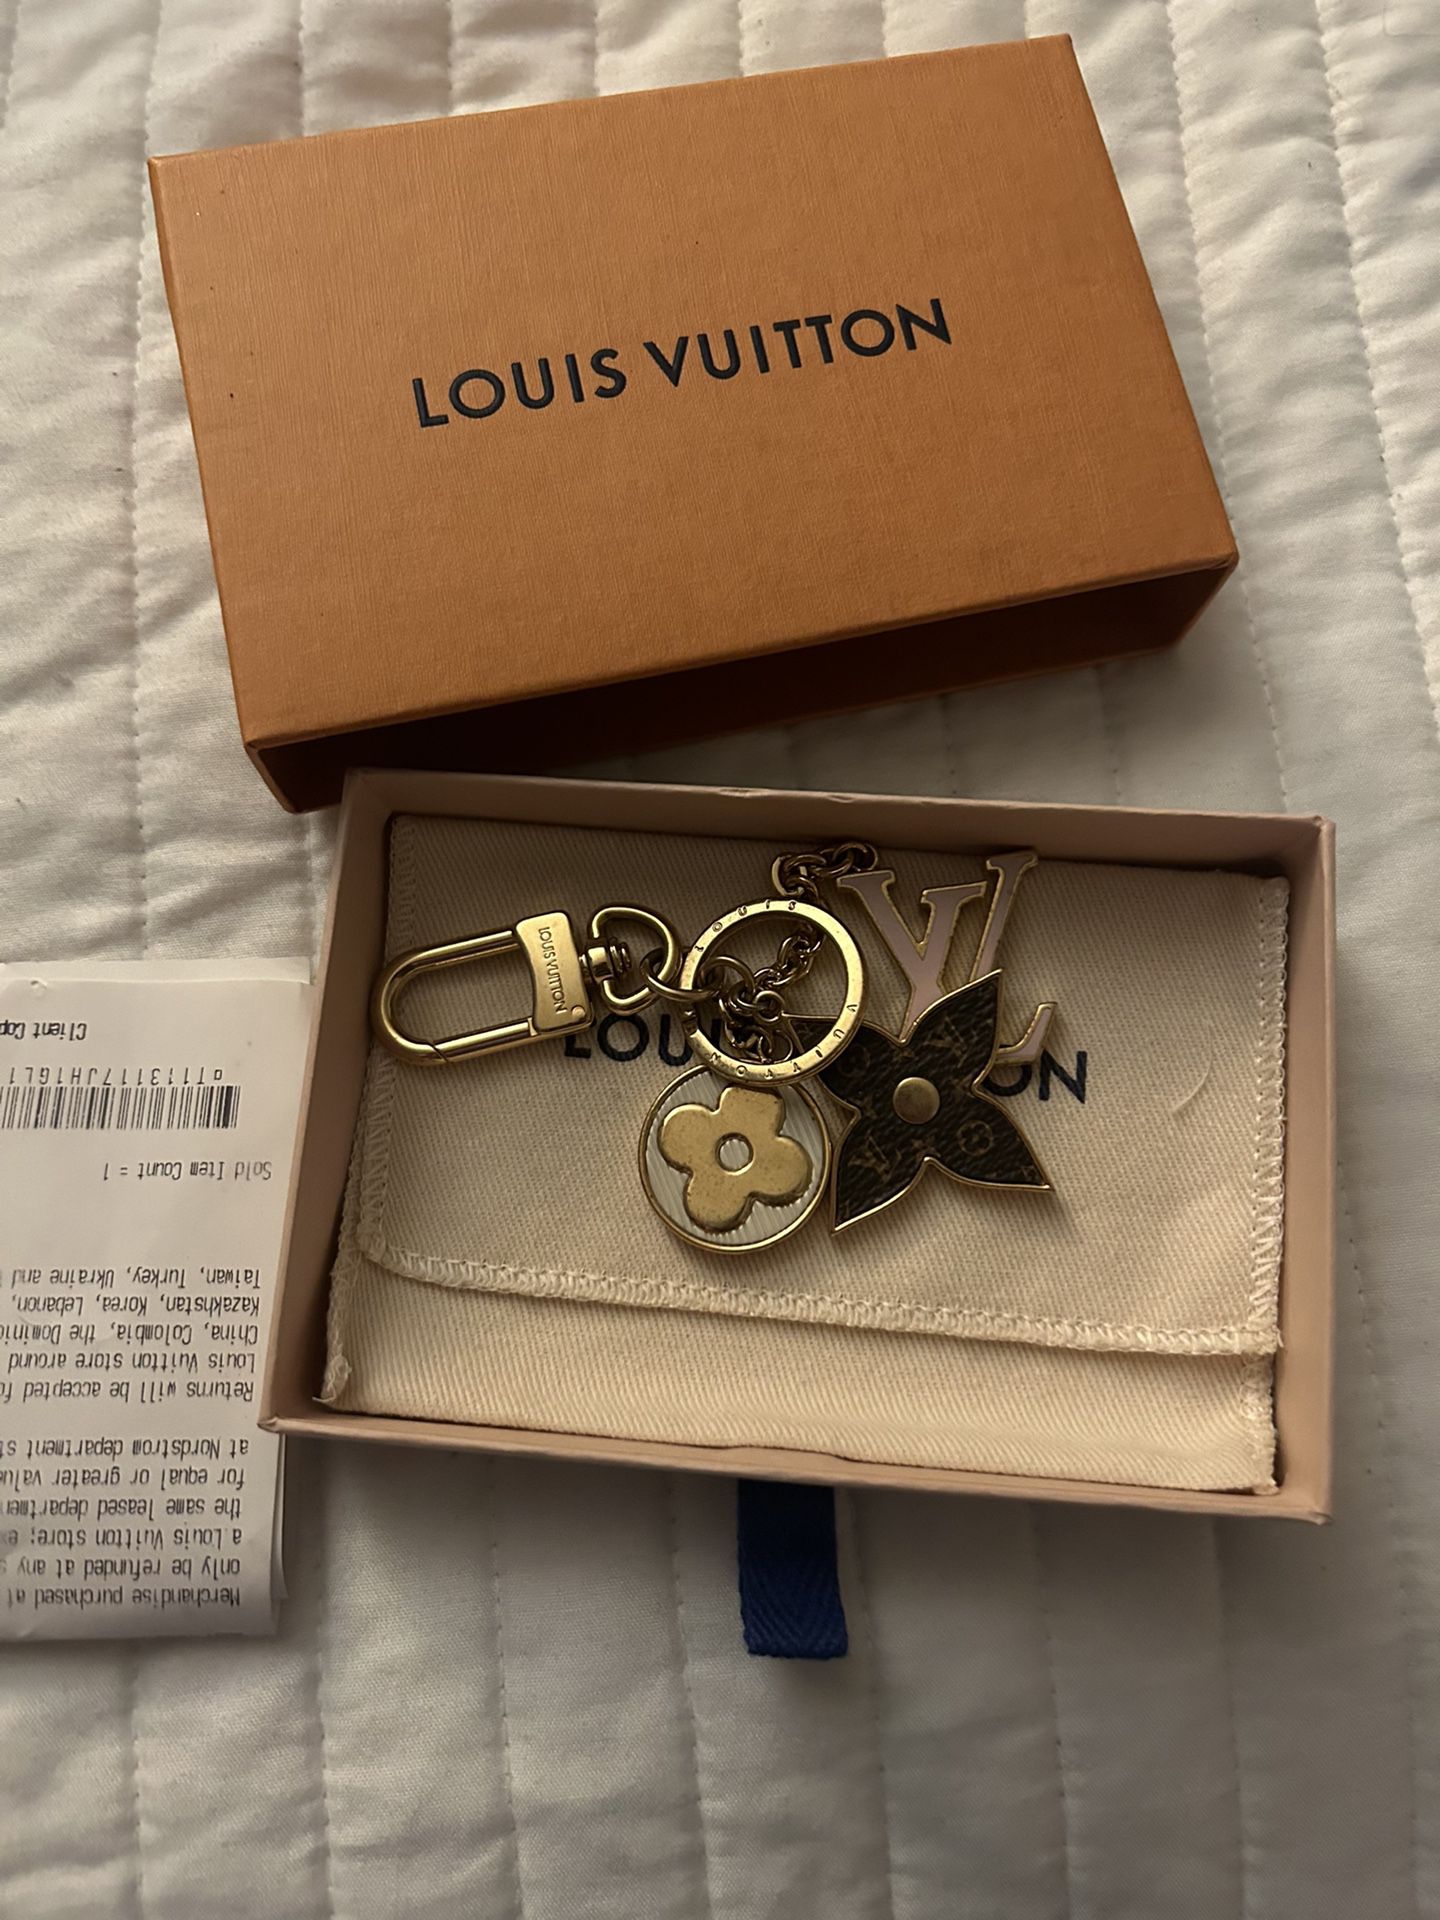 LOUIS VUITTON Logo Key Chain – The Luxury Label Nashville